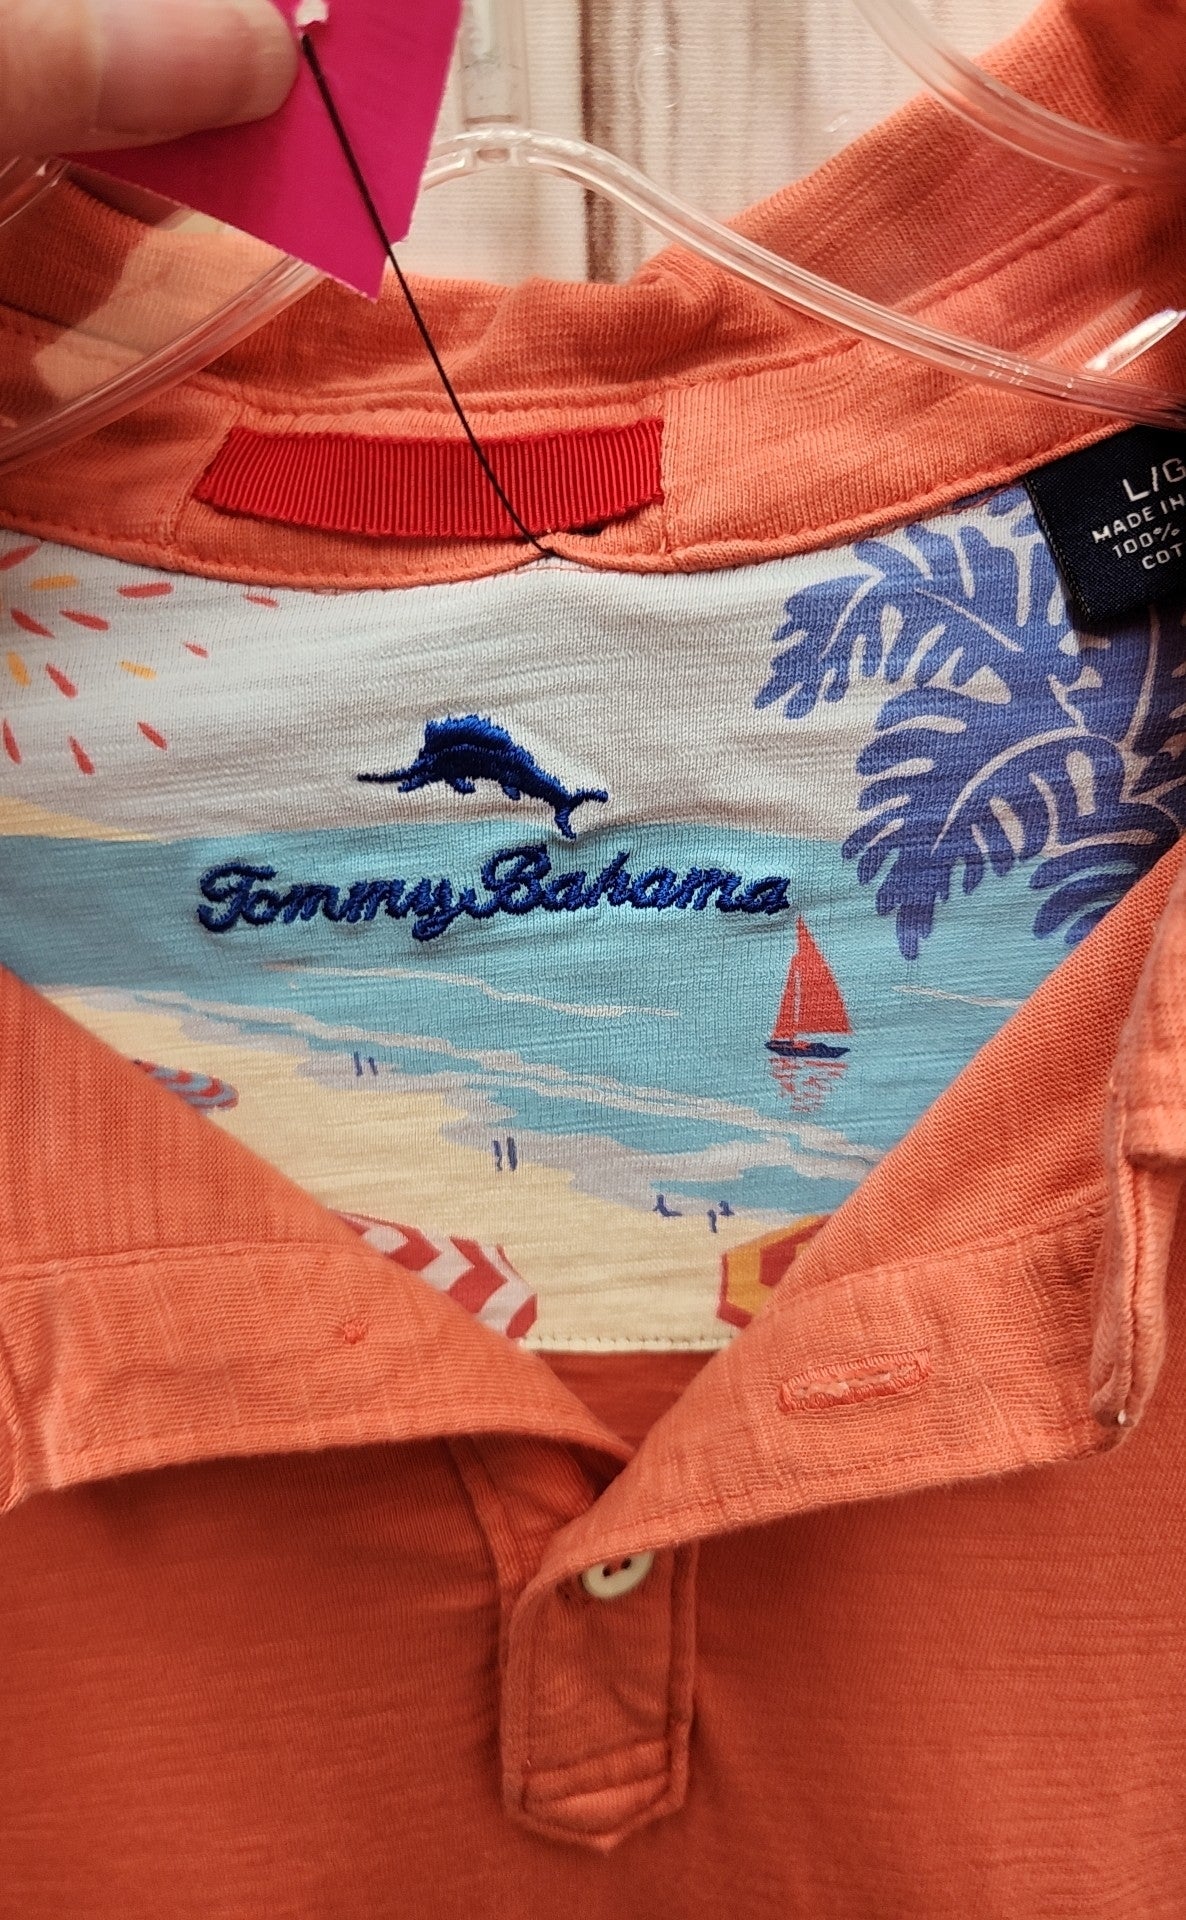 Tommy Bahama Men's Size L Coral Shirt